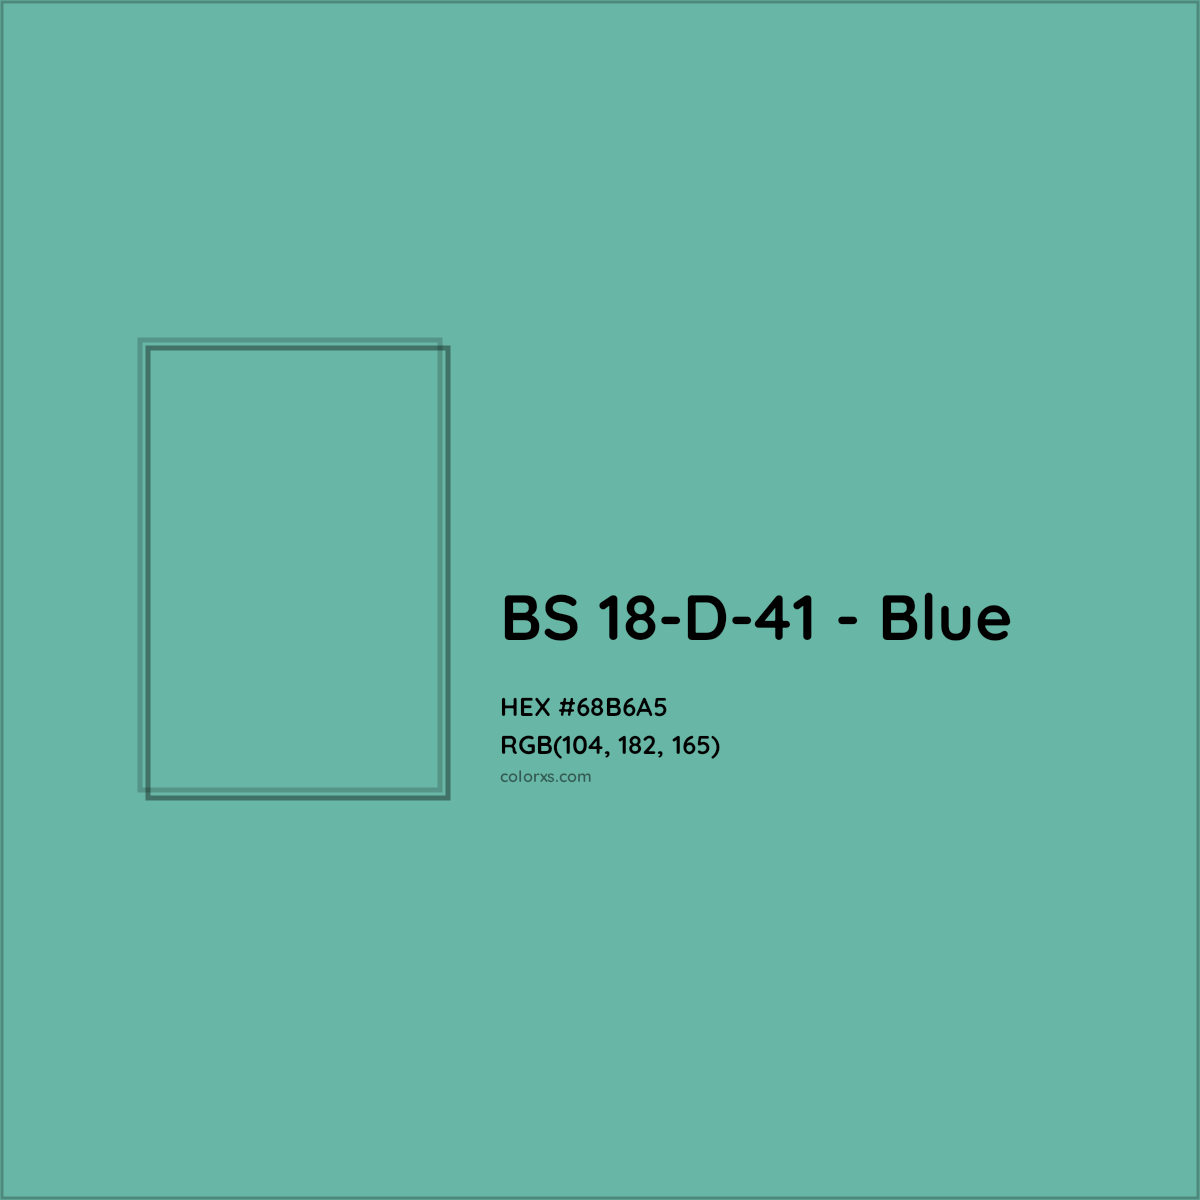 HEX #68B6A5 BS 18-D-41 - Blue CMS British Standard 4800 - Color Code